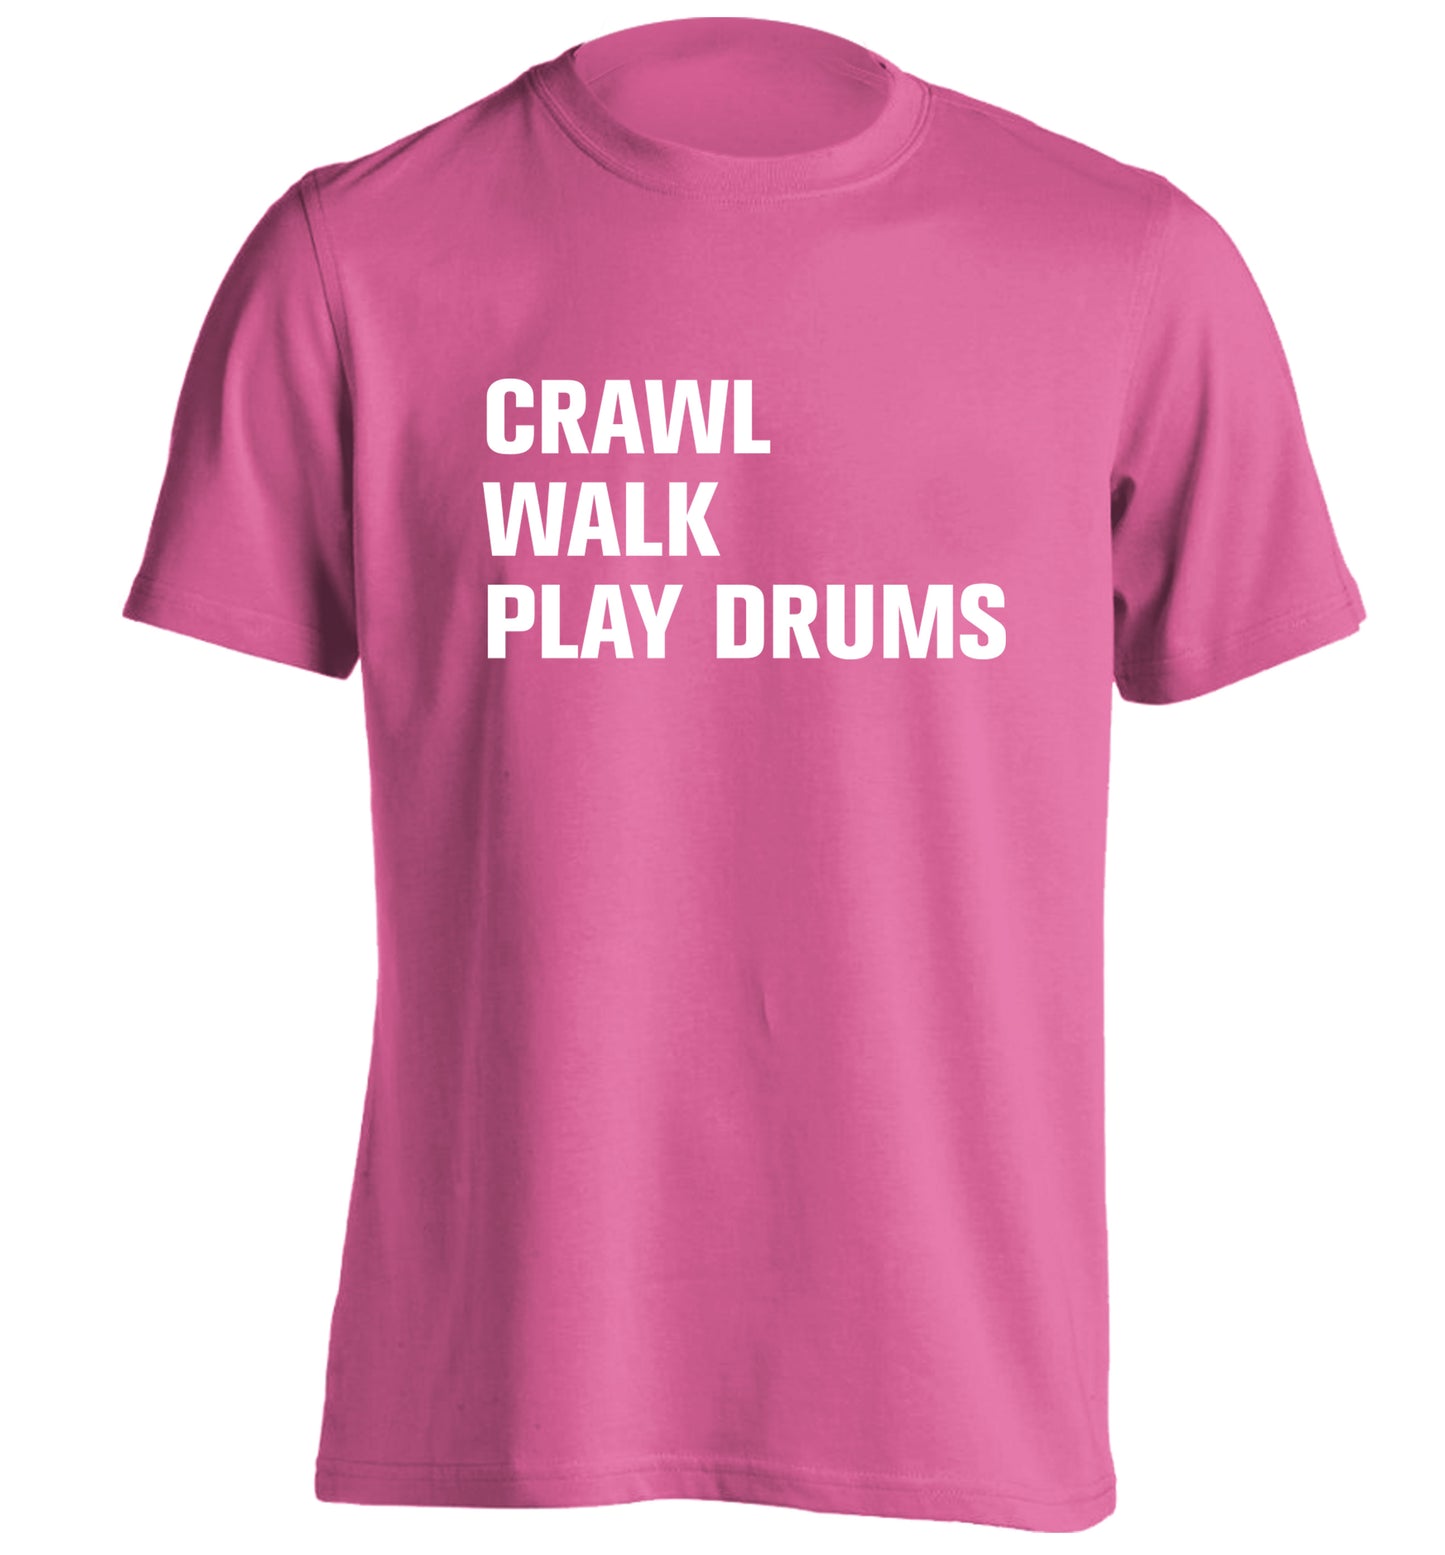 Crawl walk play drums adults unisex pink Tshirt 2XL